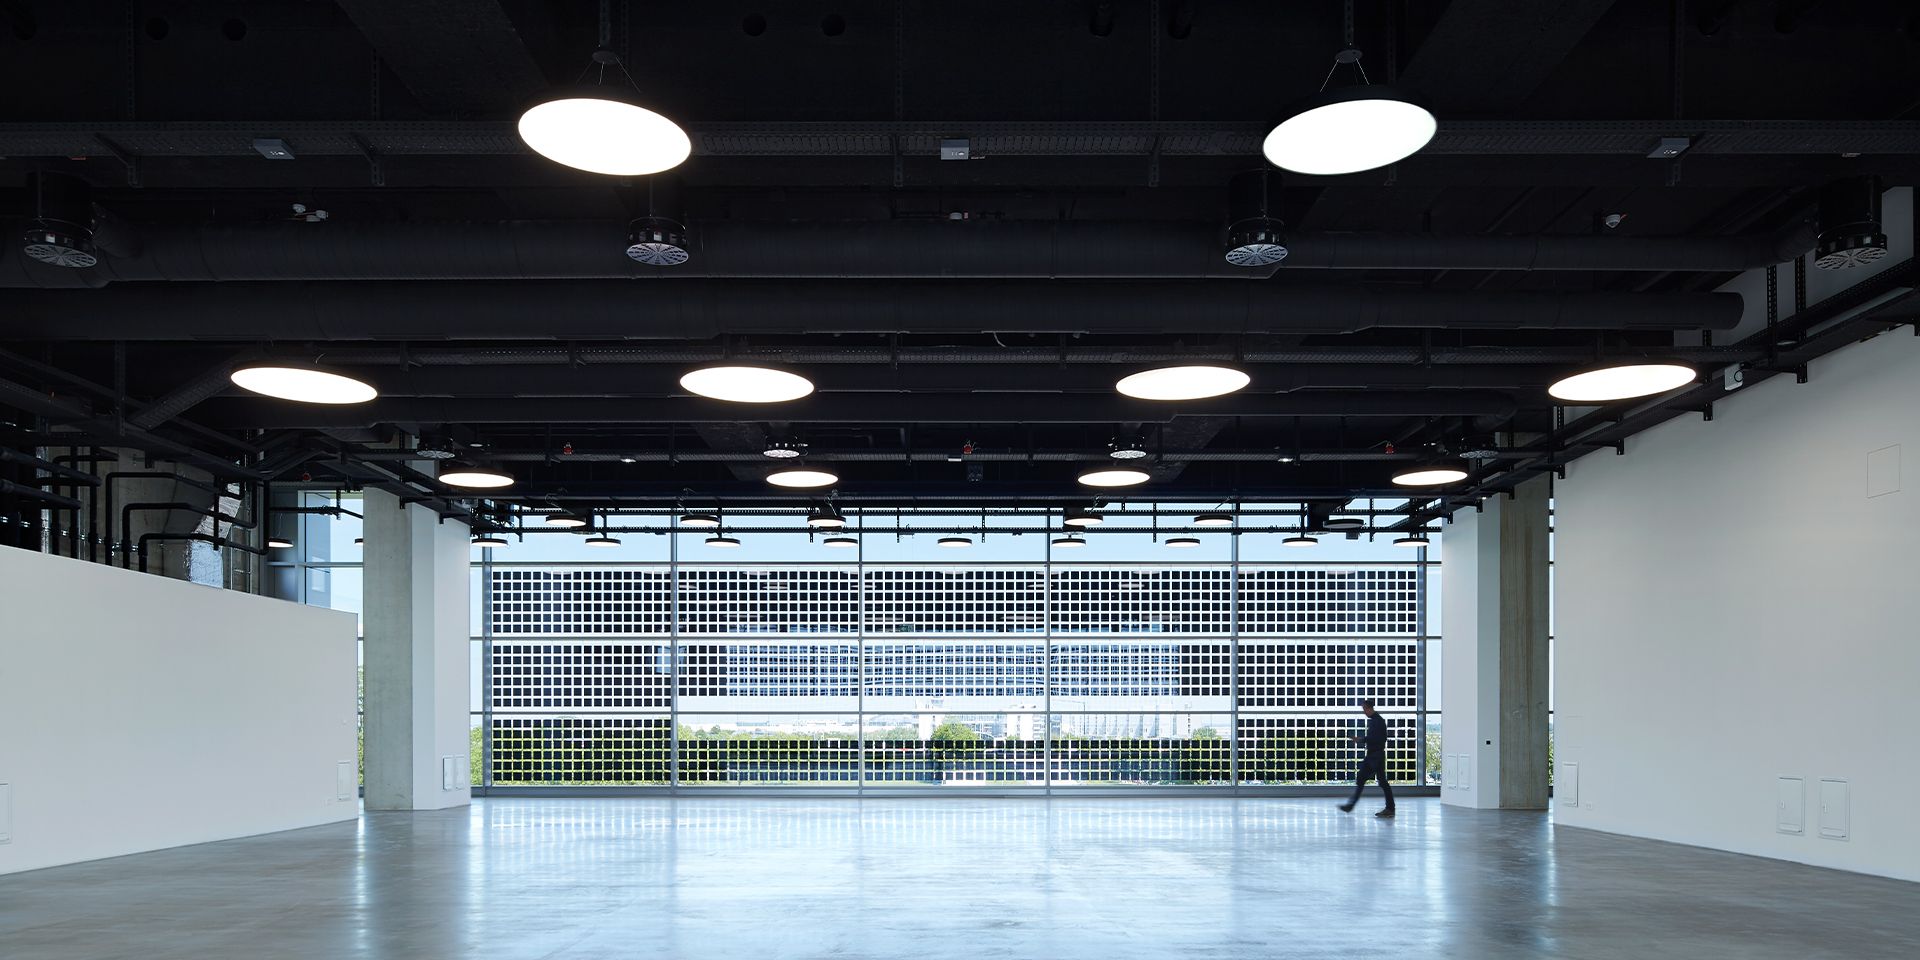 Das Audi Brand Experience Center bietet innen einen großen freien Raum pro Geschoss.